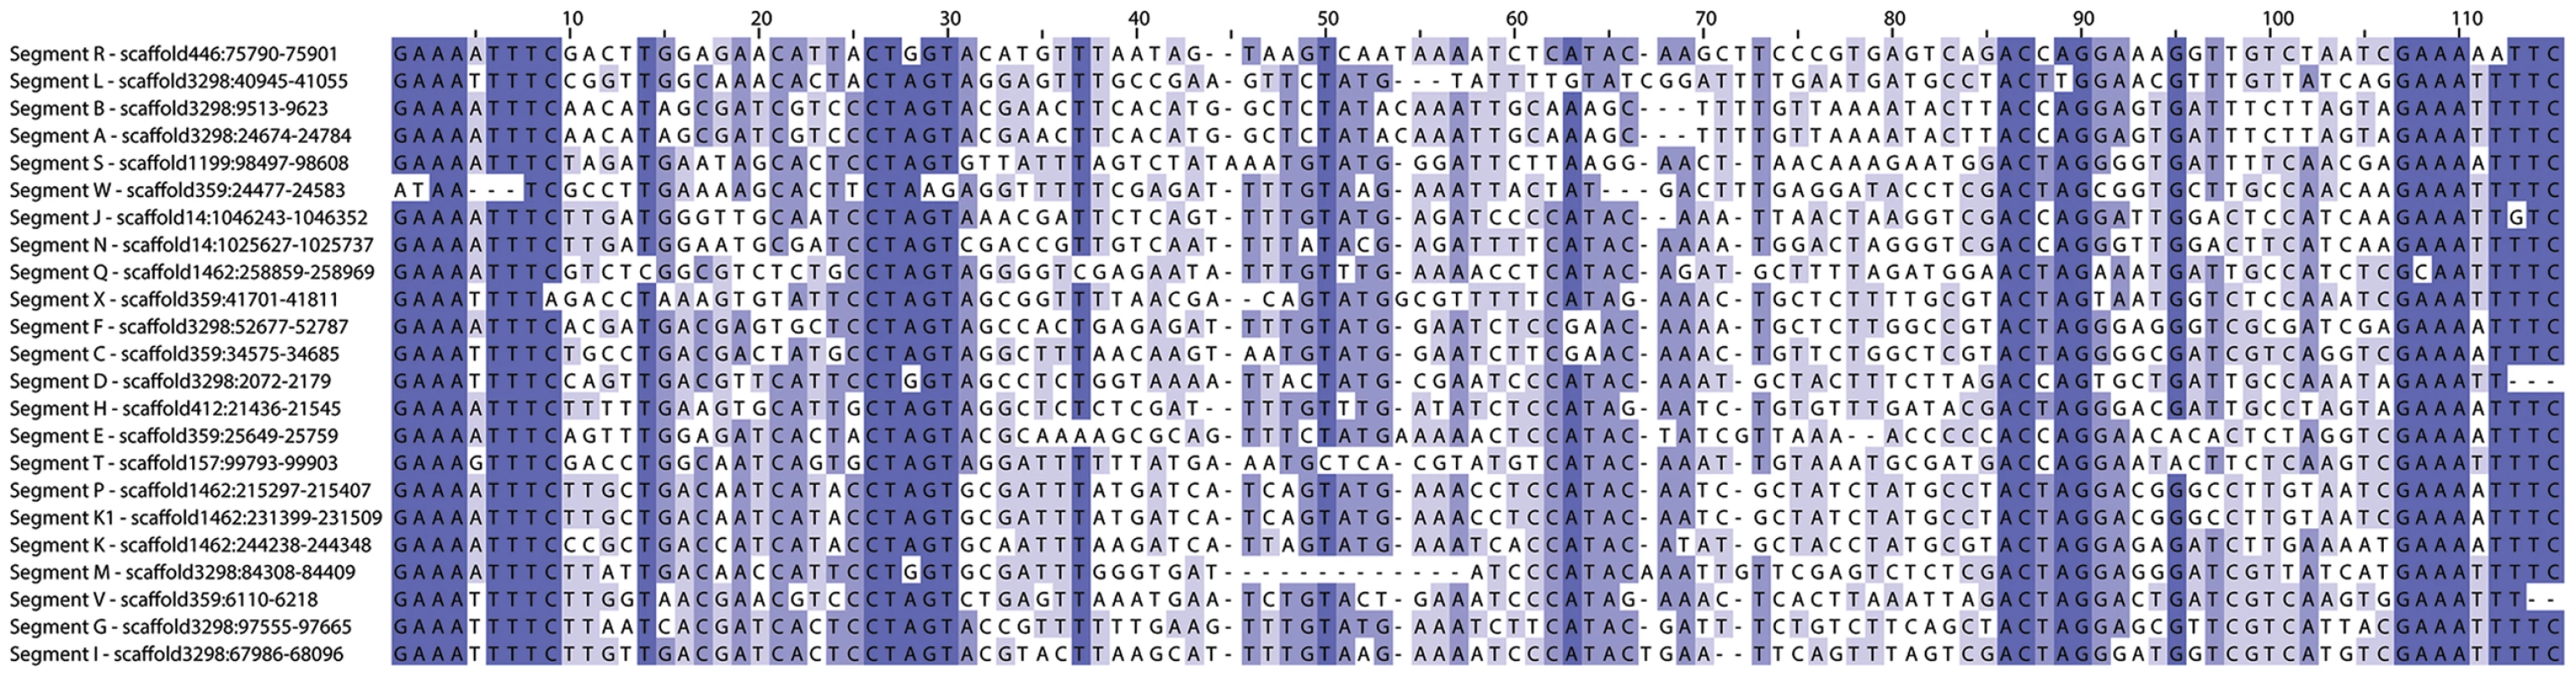 Relatedness of Host Integration Motif (HIM) sequences for all MdBV proviral segments.